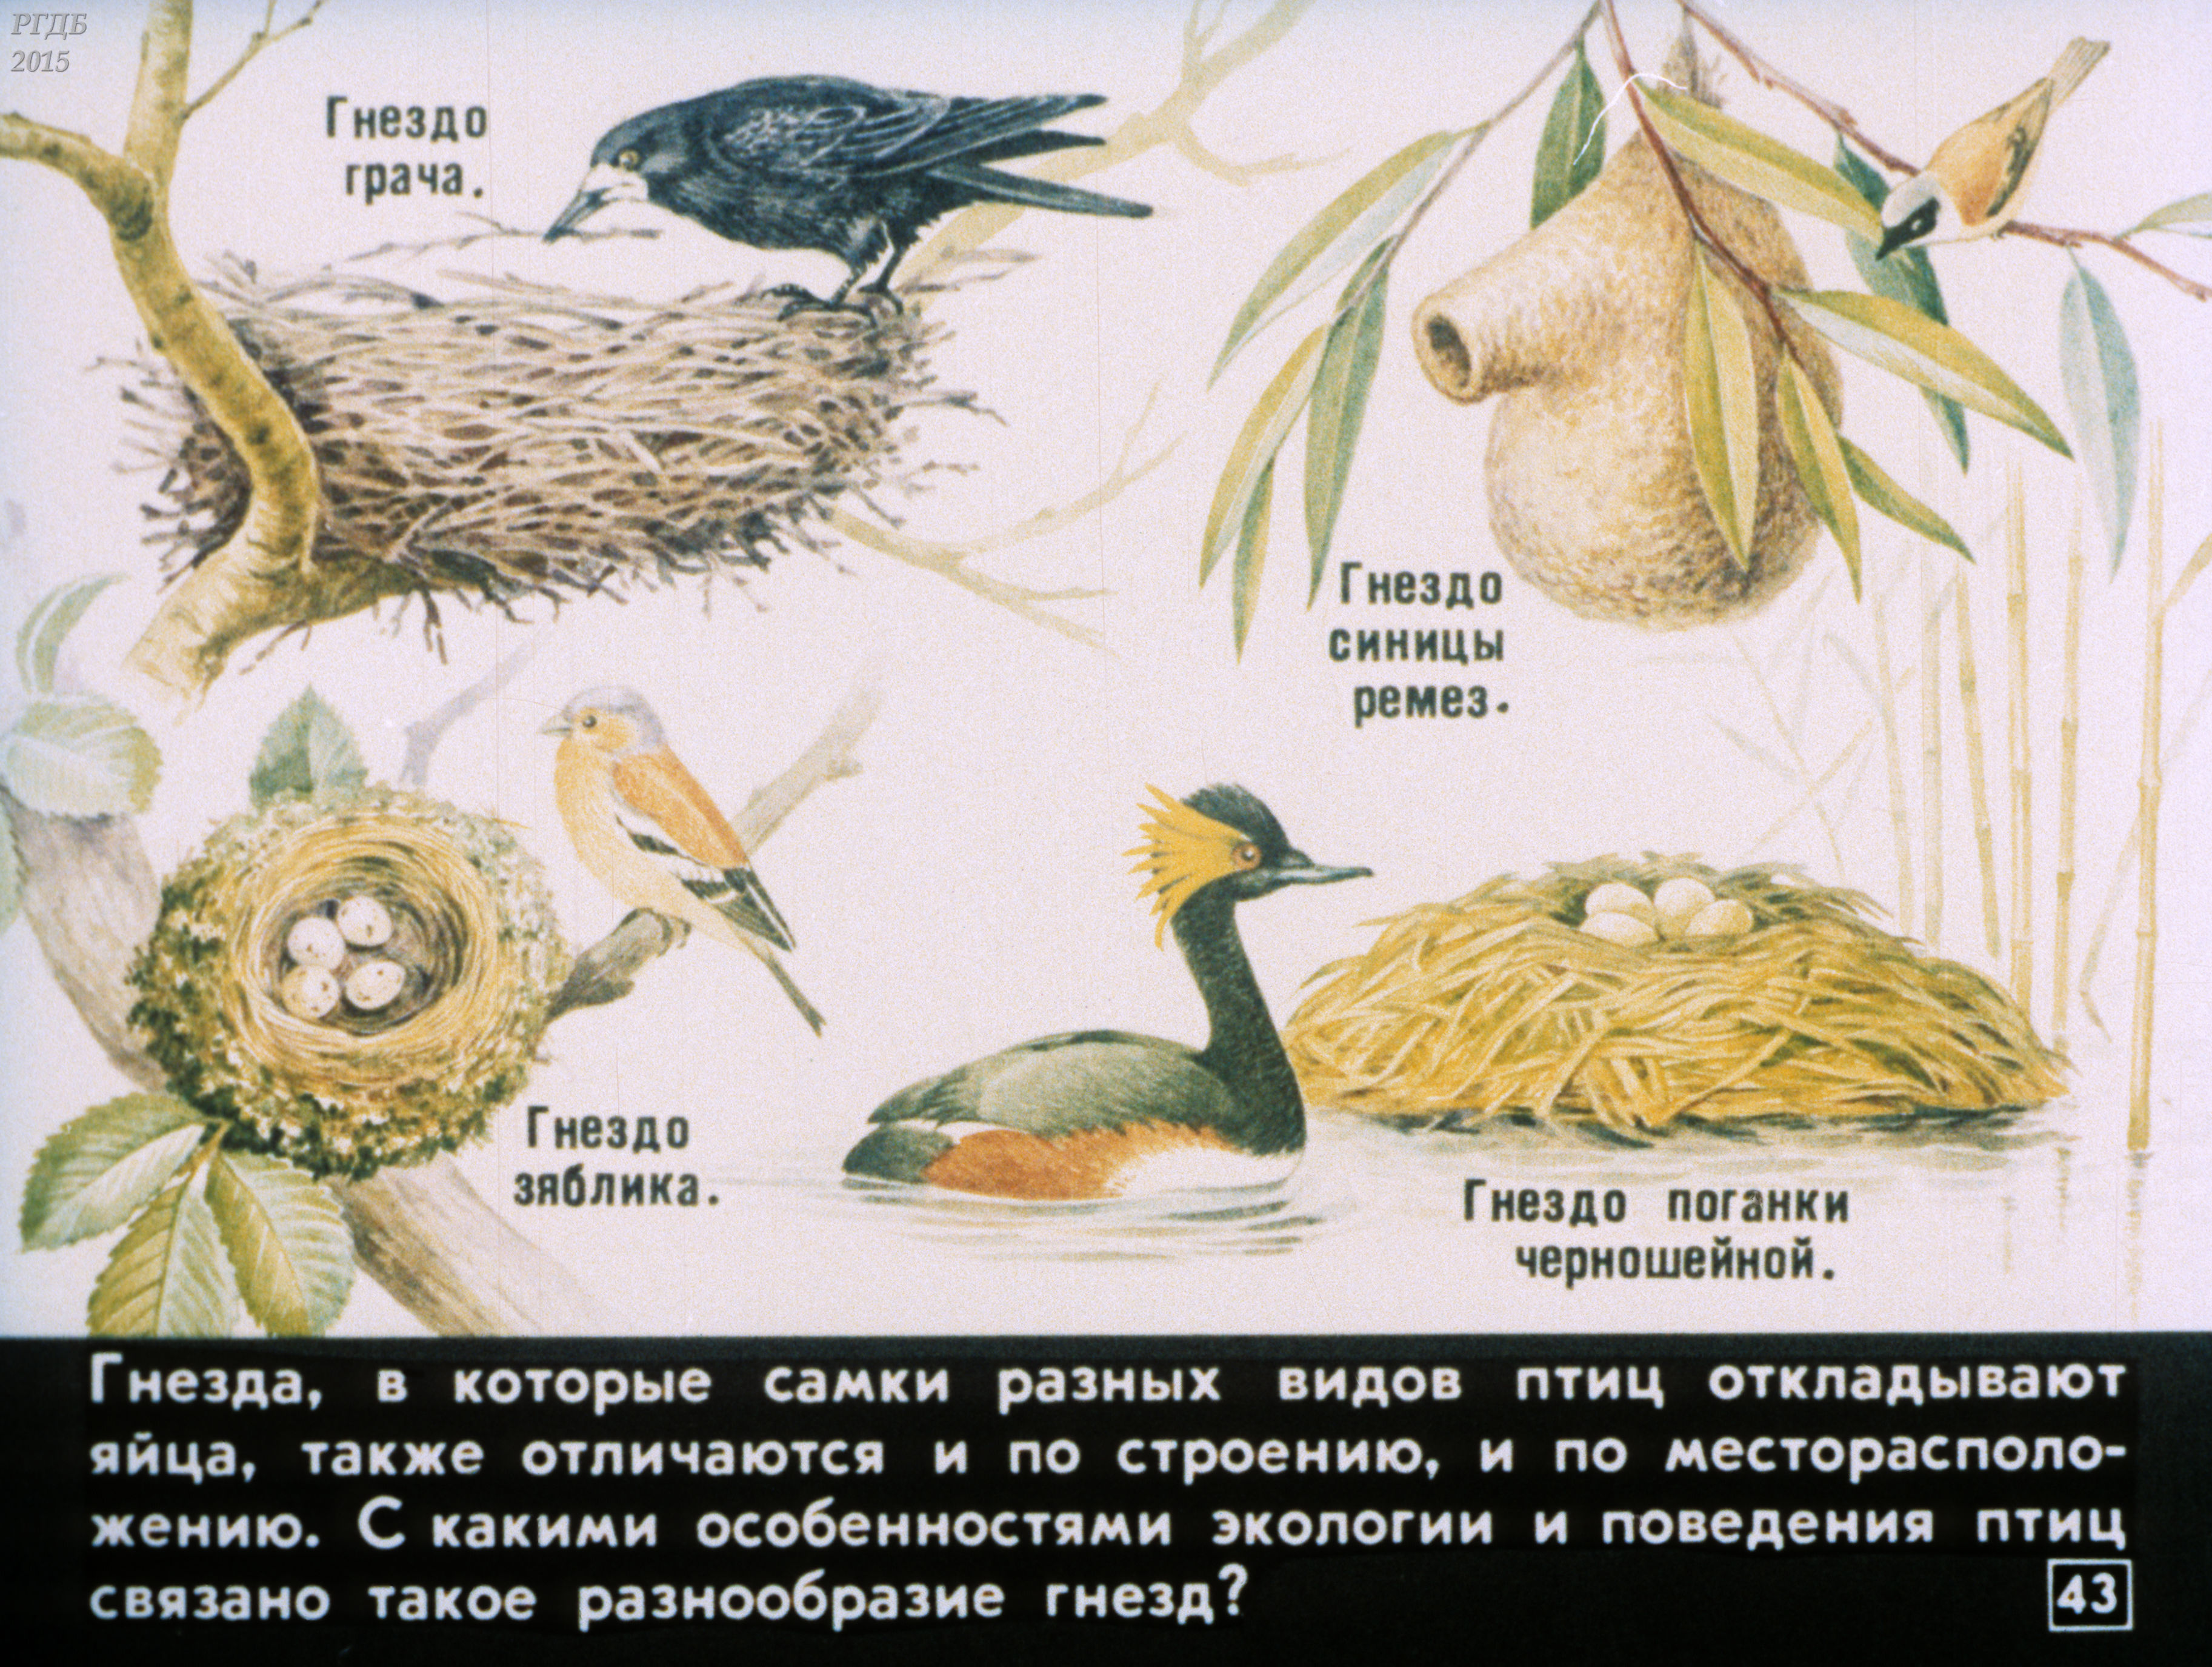 Гнезда птиц названия. Типы гнезд птиц. Гнёзда птиц с названиями. Разнообразие гнезд птиц. Виды птичьих гнезд.